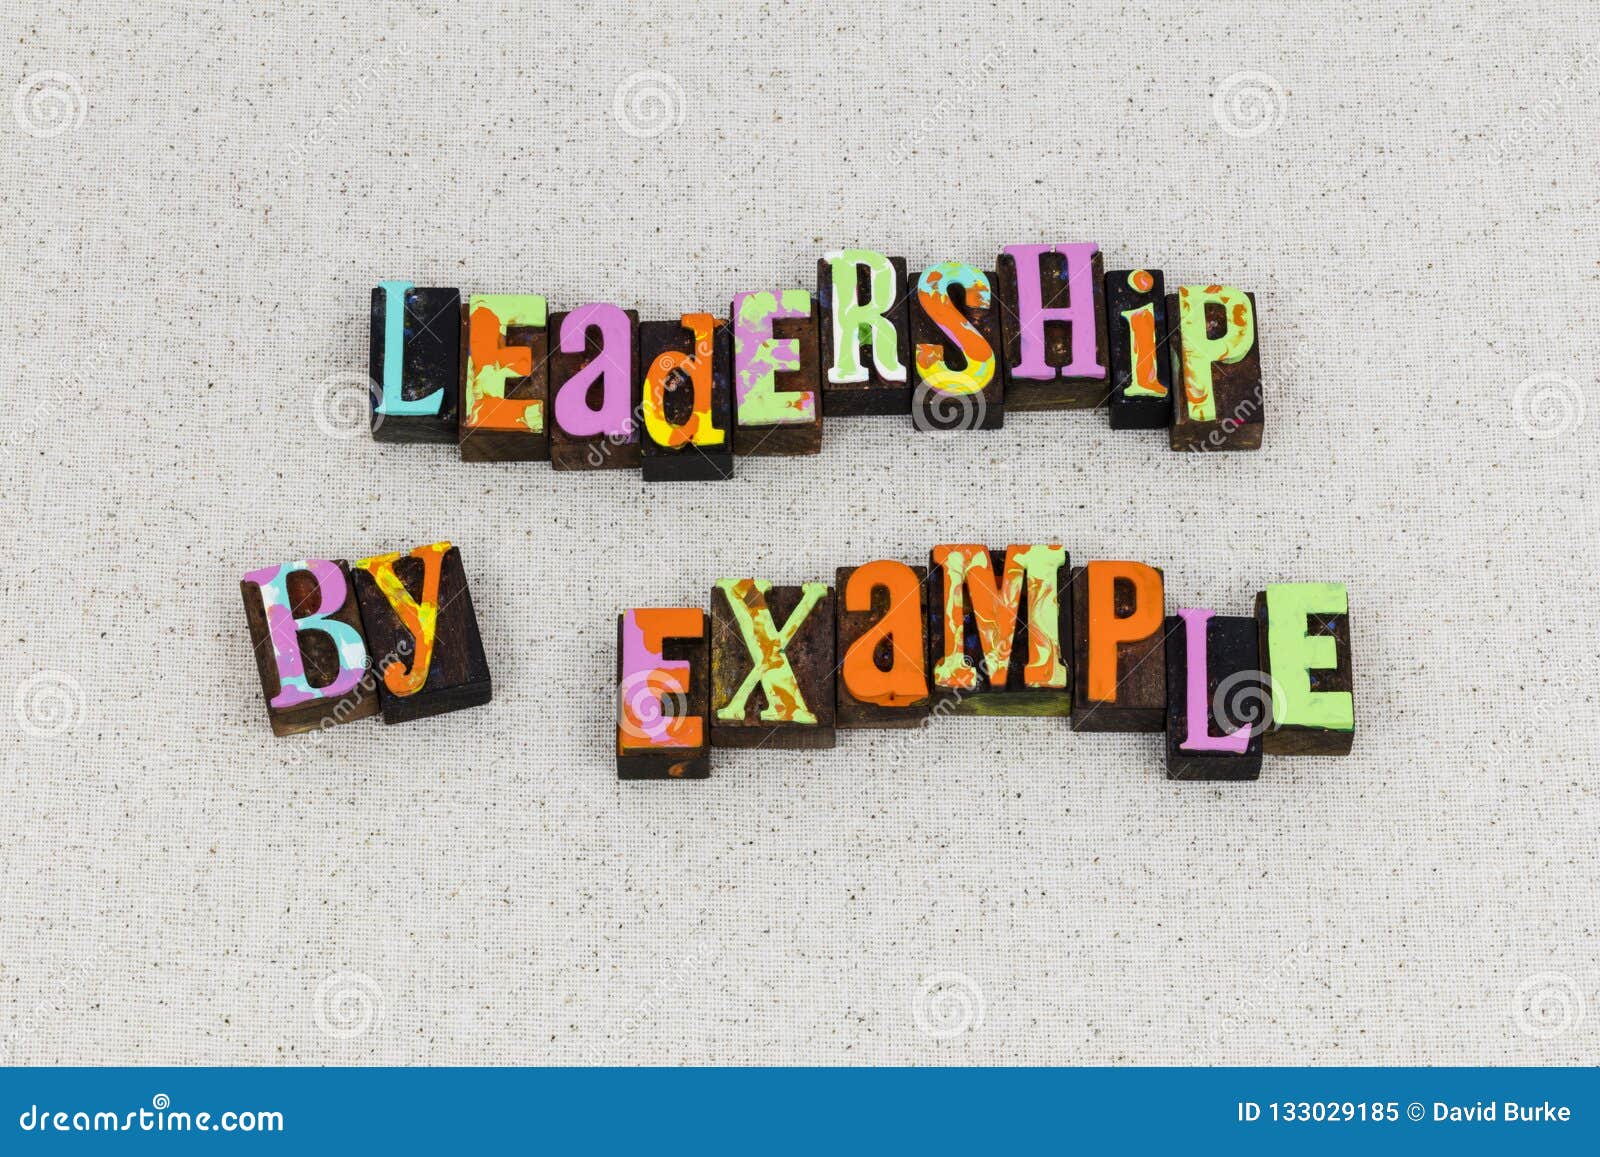 leadership lead example management leader teacher manager